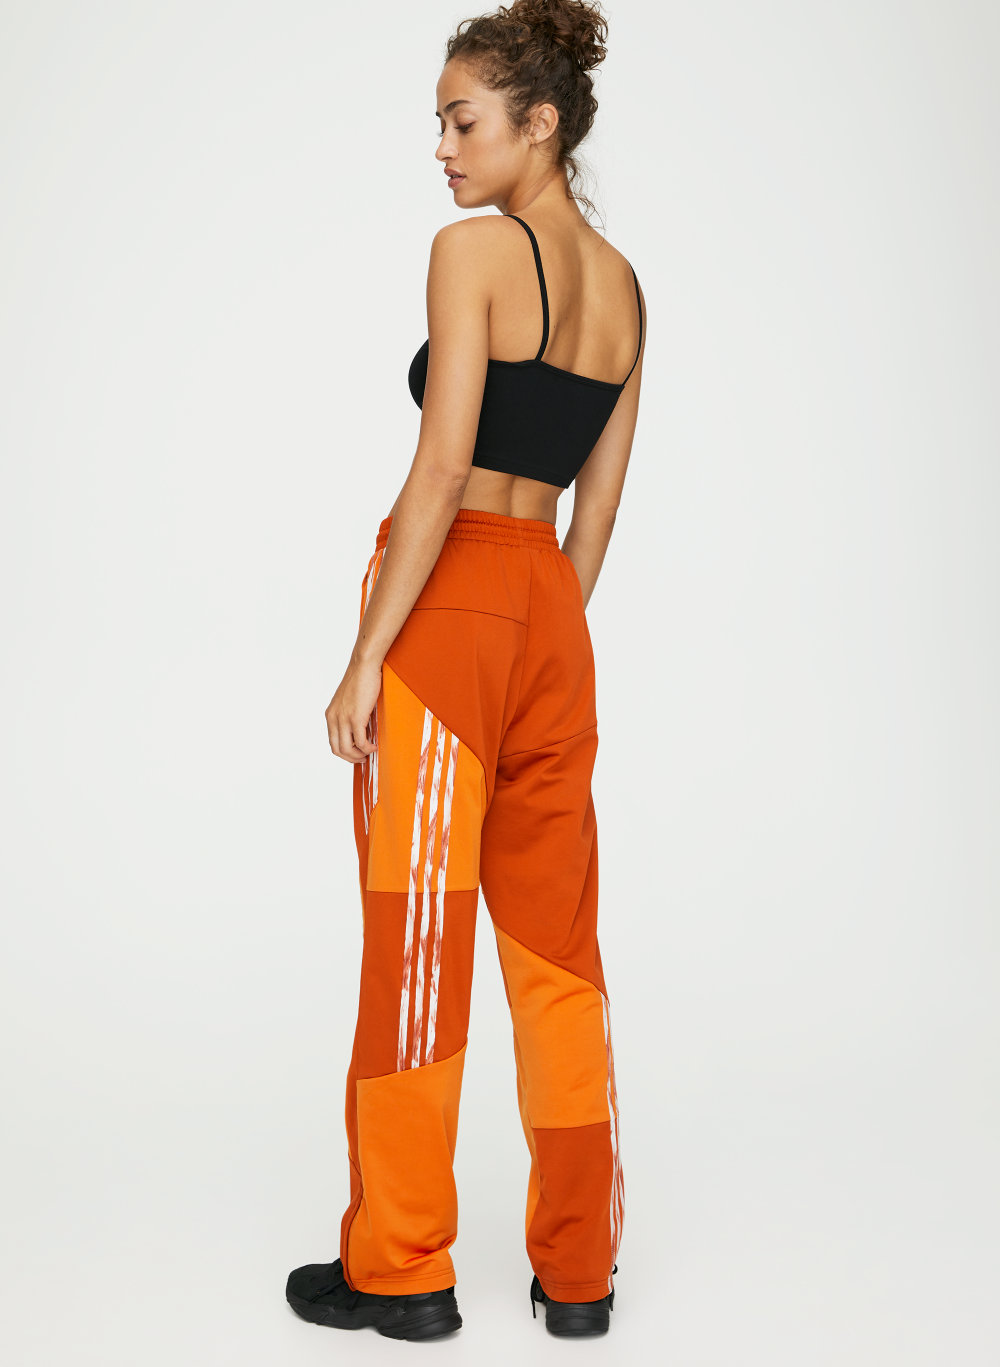 Buy > adidas firebird track pants orange > in stock